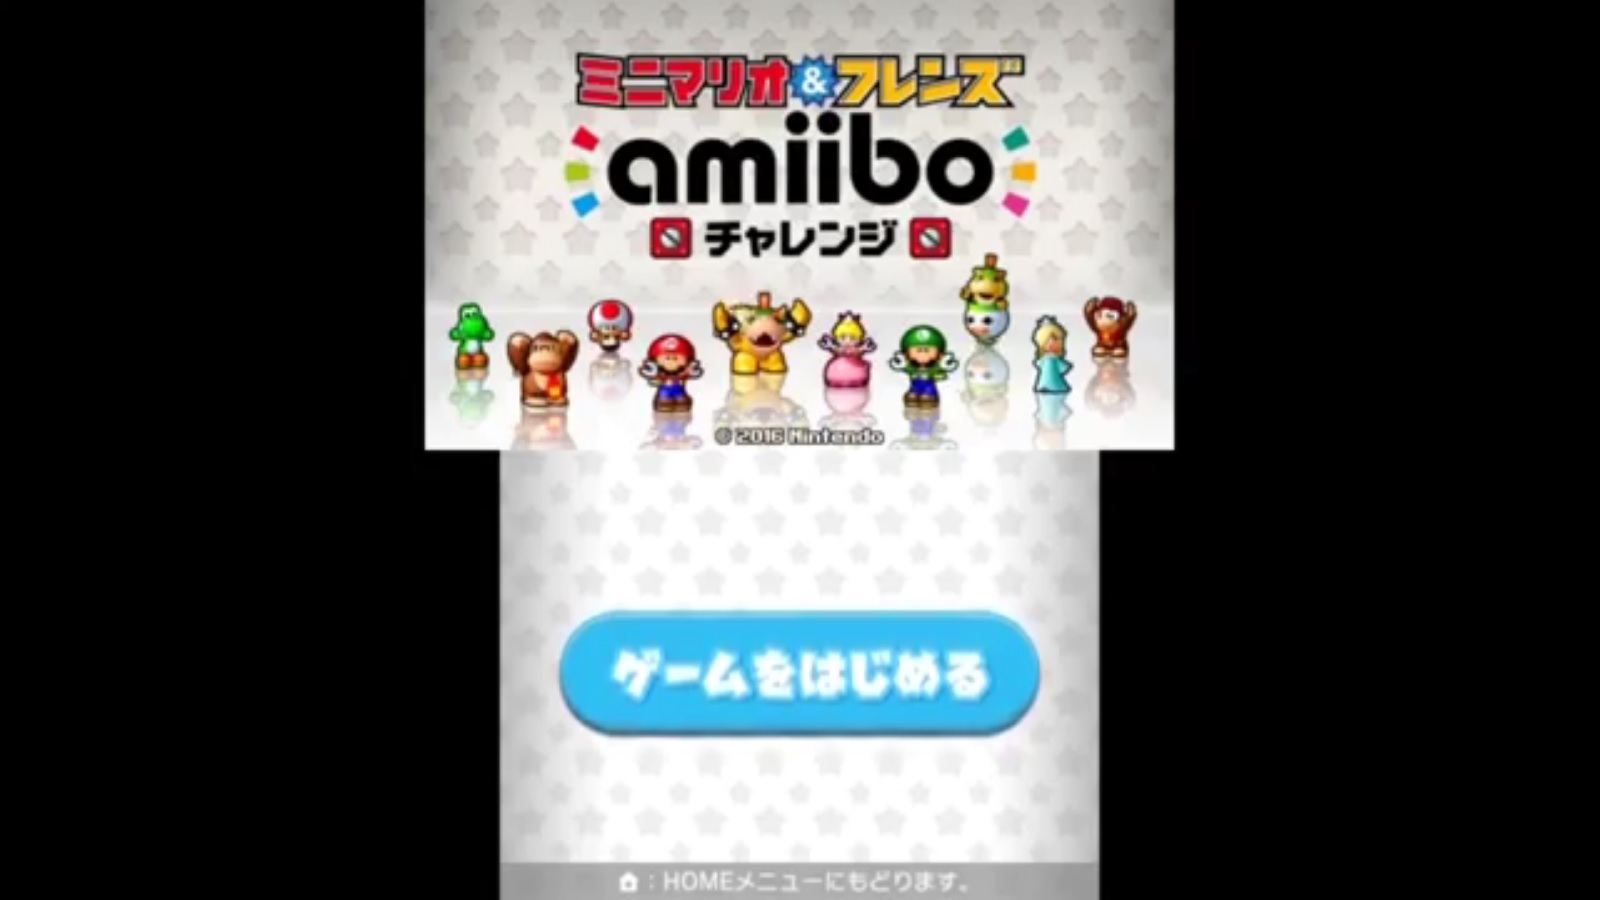 Mini Mario & amiibo 3DS footage